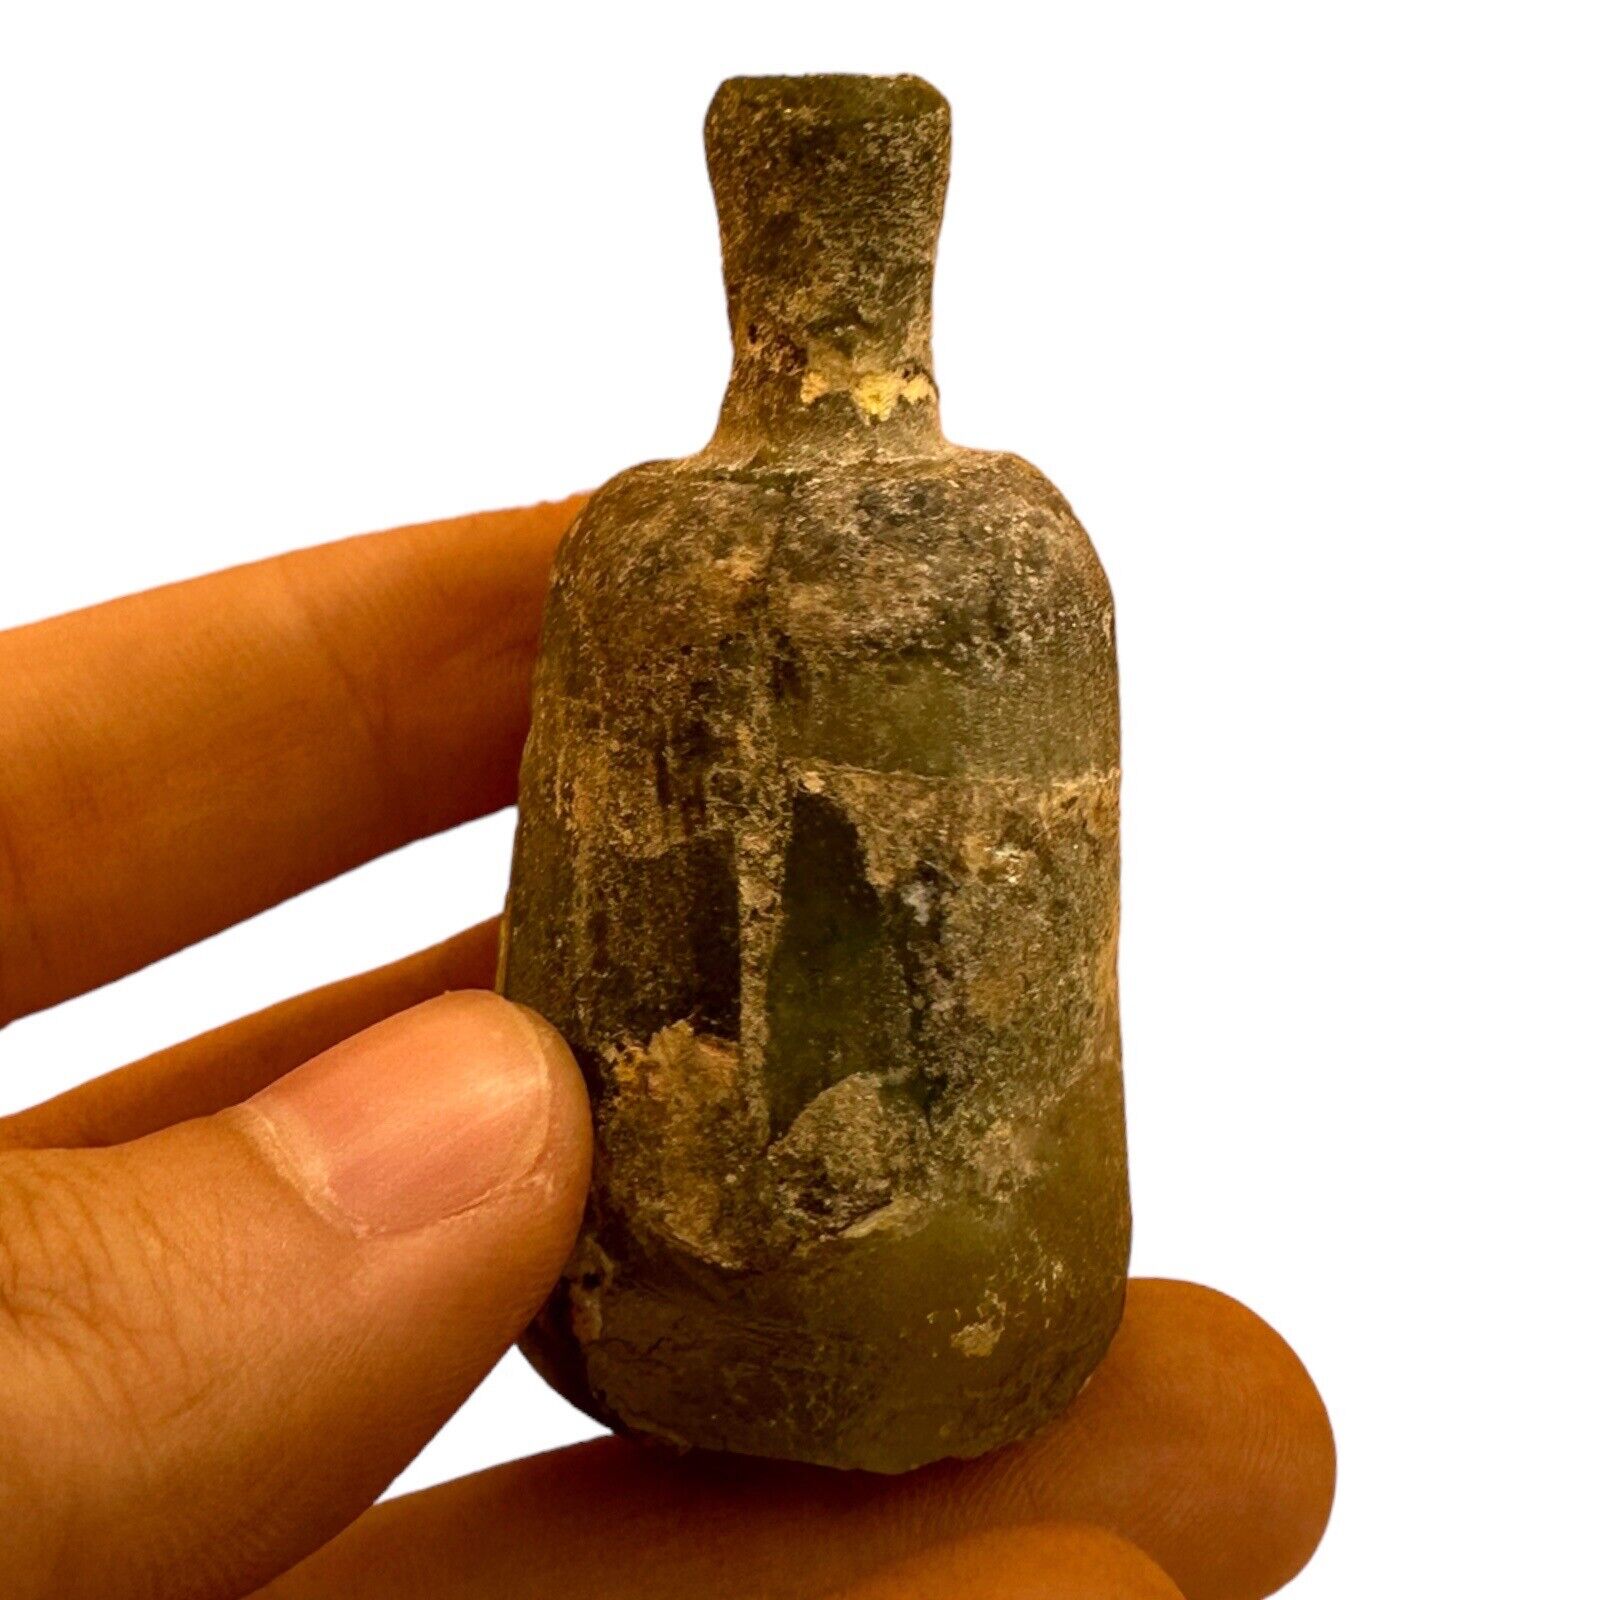 Wonderful Rare Ancient Roman Beautiful Glass Bottle - 1st century A.D.